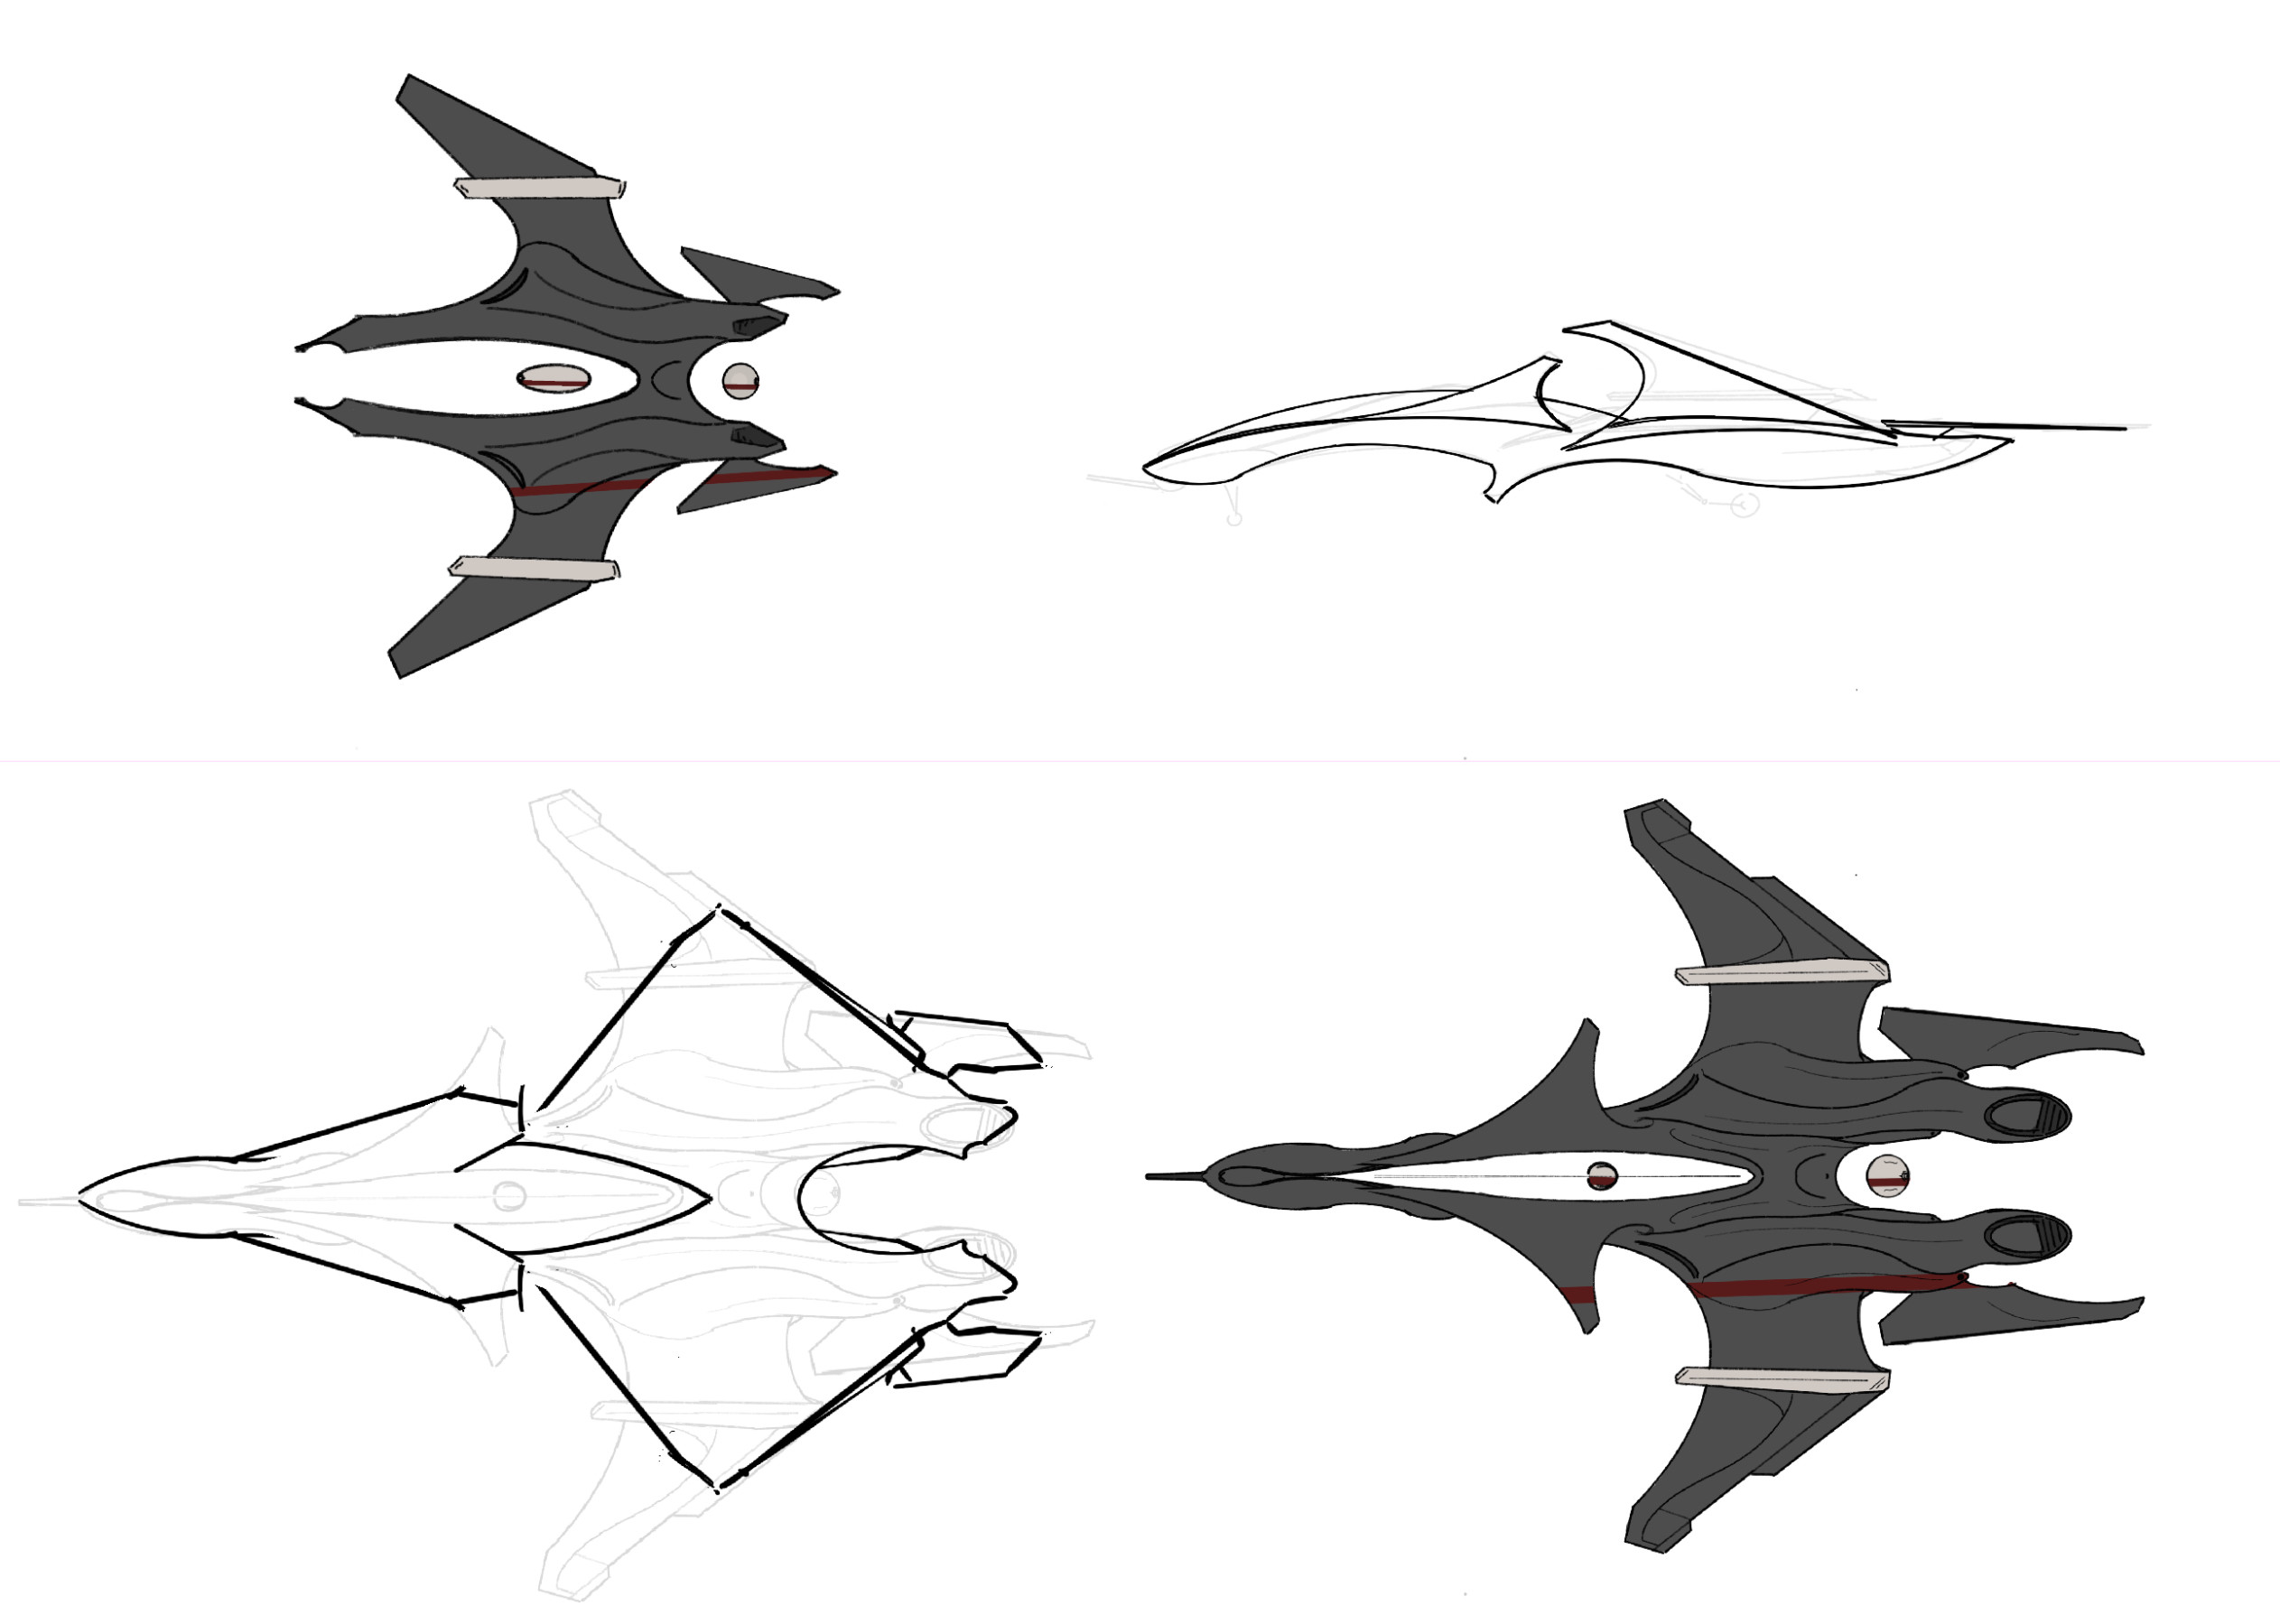 Vellum and Vella’Nora orthographic Concept sketches.